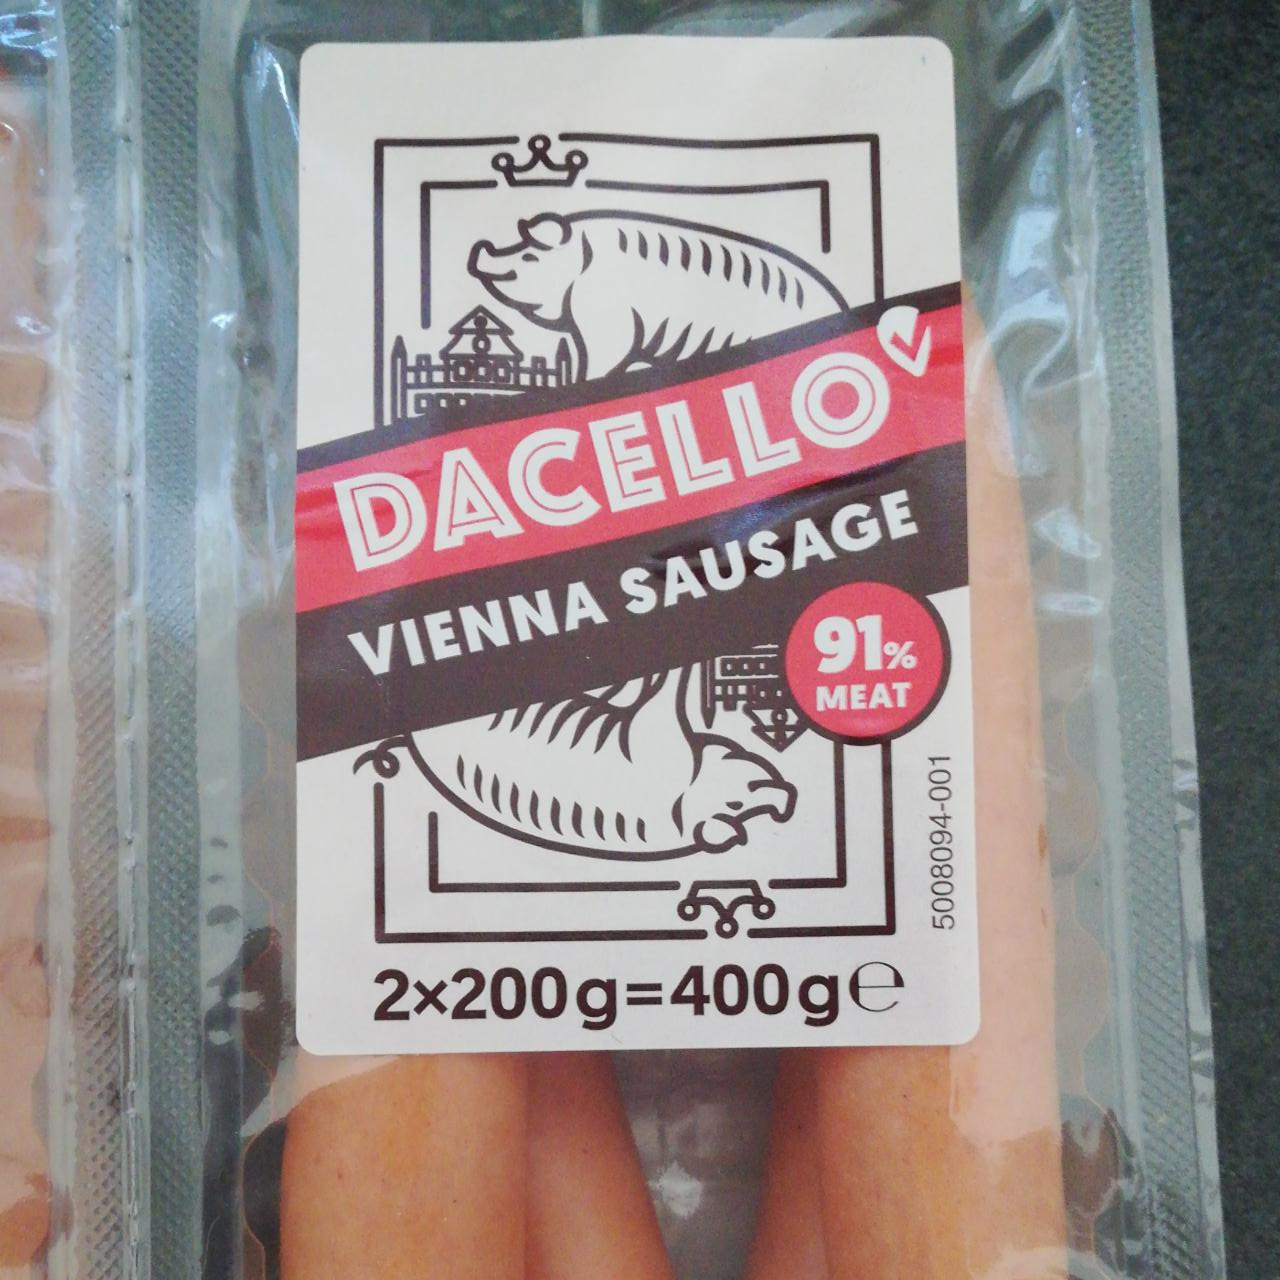 Fotografie - Vienna Sausage 91% meat Dacello